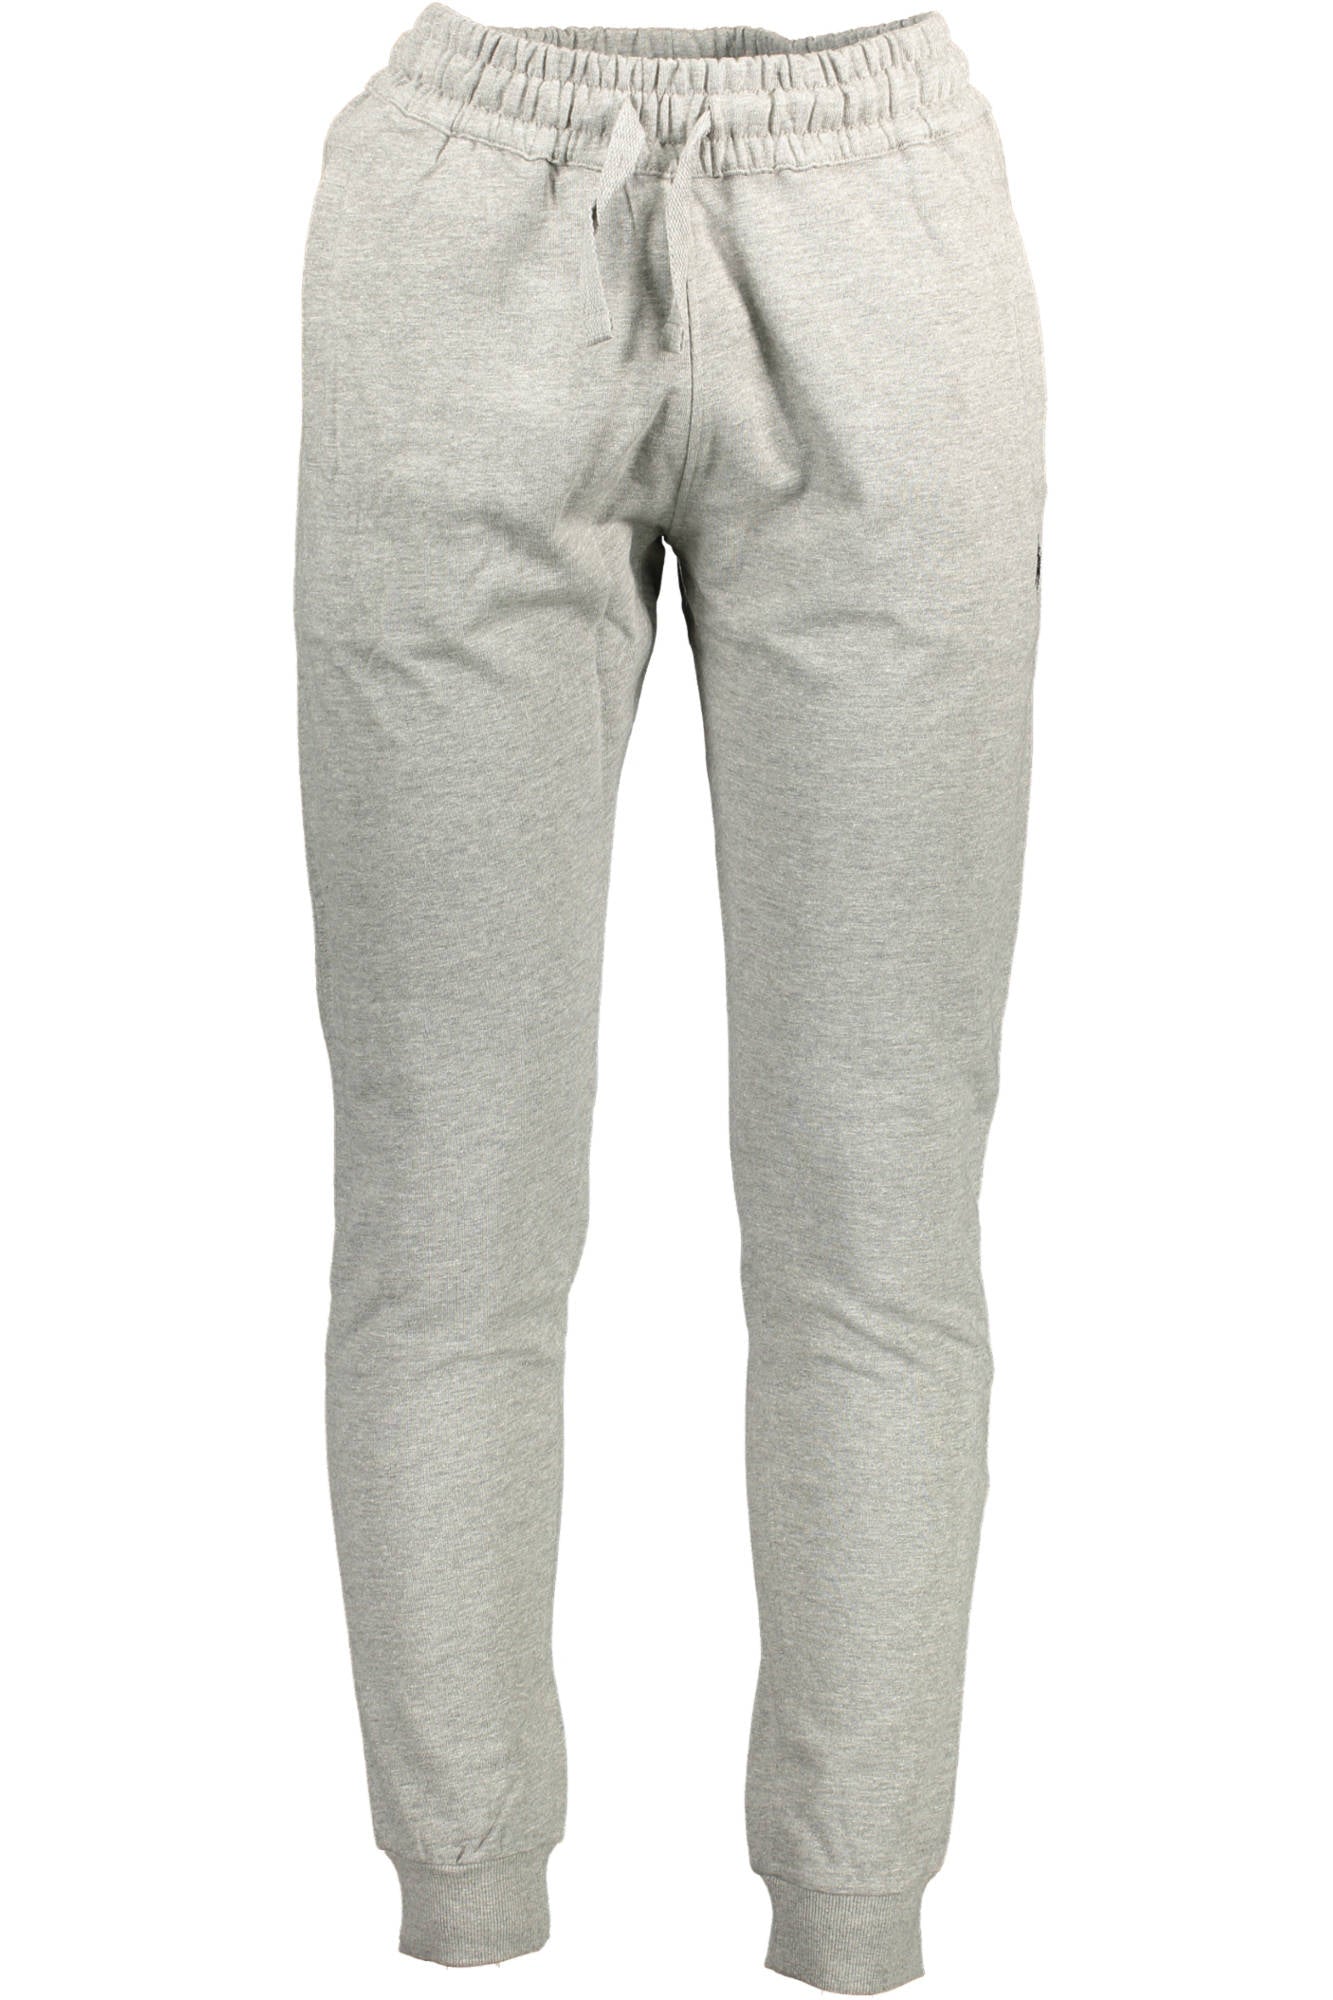 U.S. POLO ASSN. Gray Jeans & Pant - Fizigo